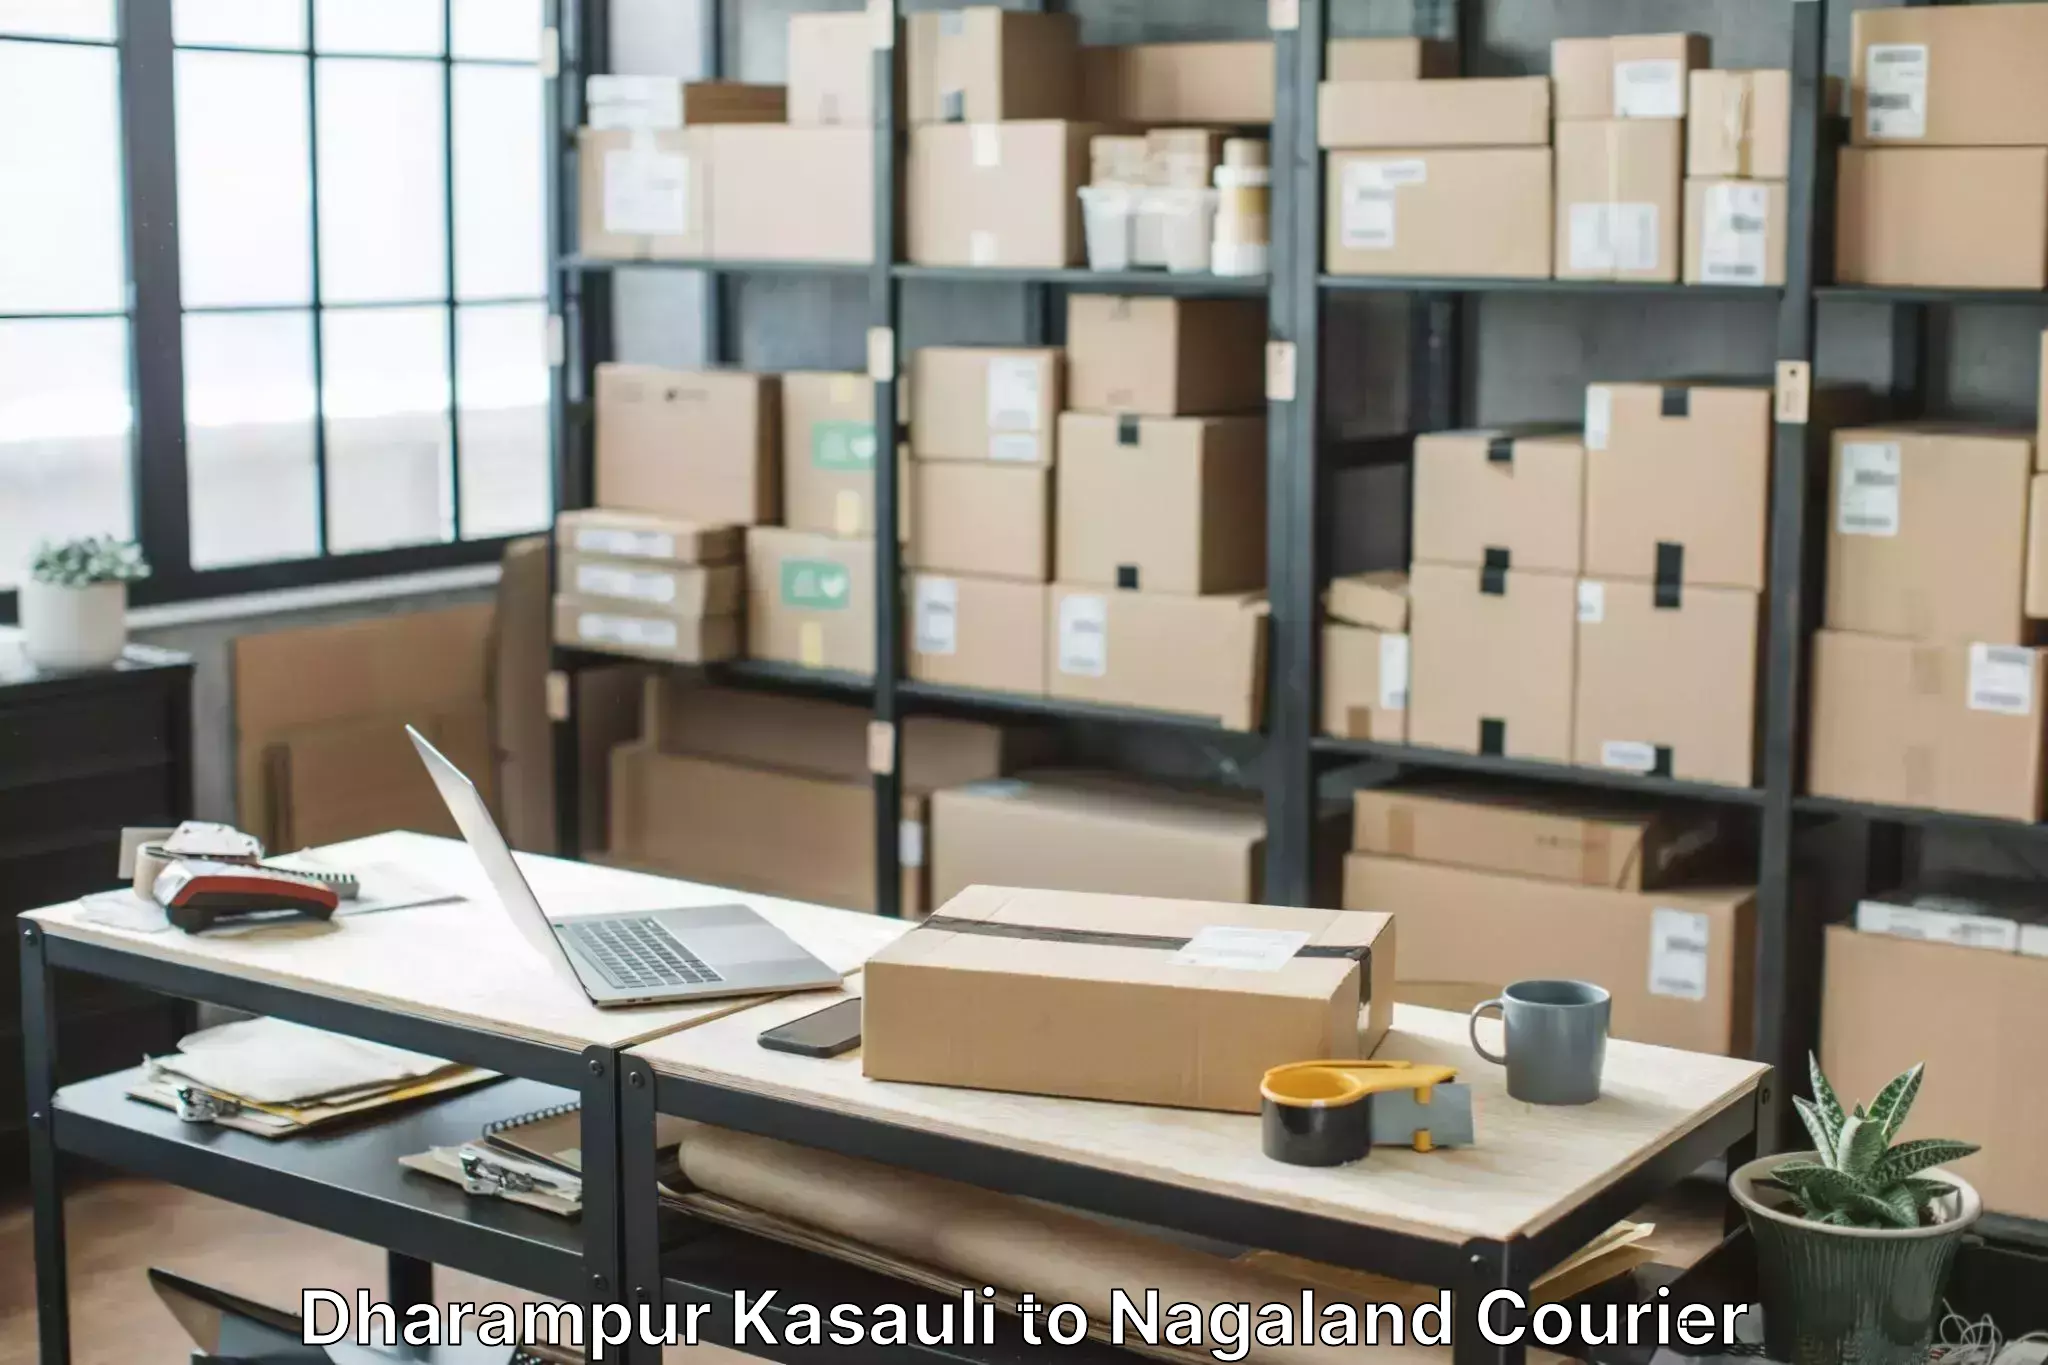 Trusted moving company Dharampur Kasauli to Nagaland